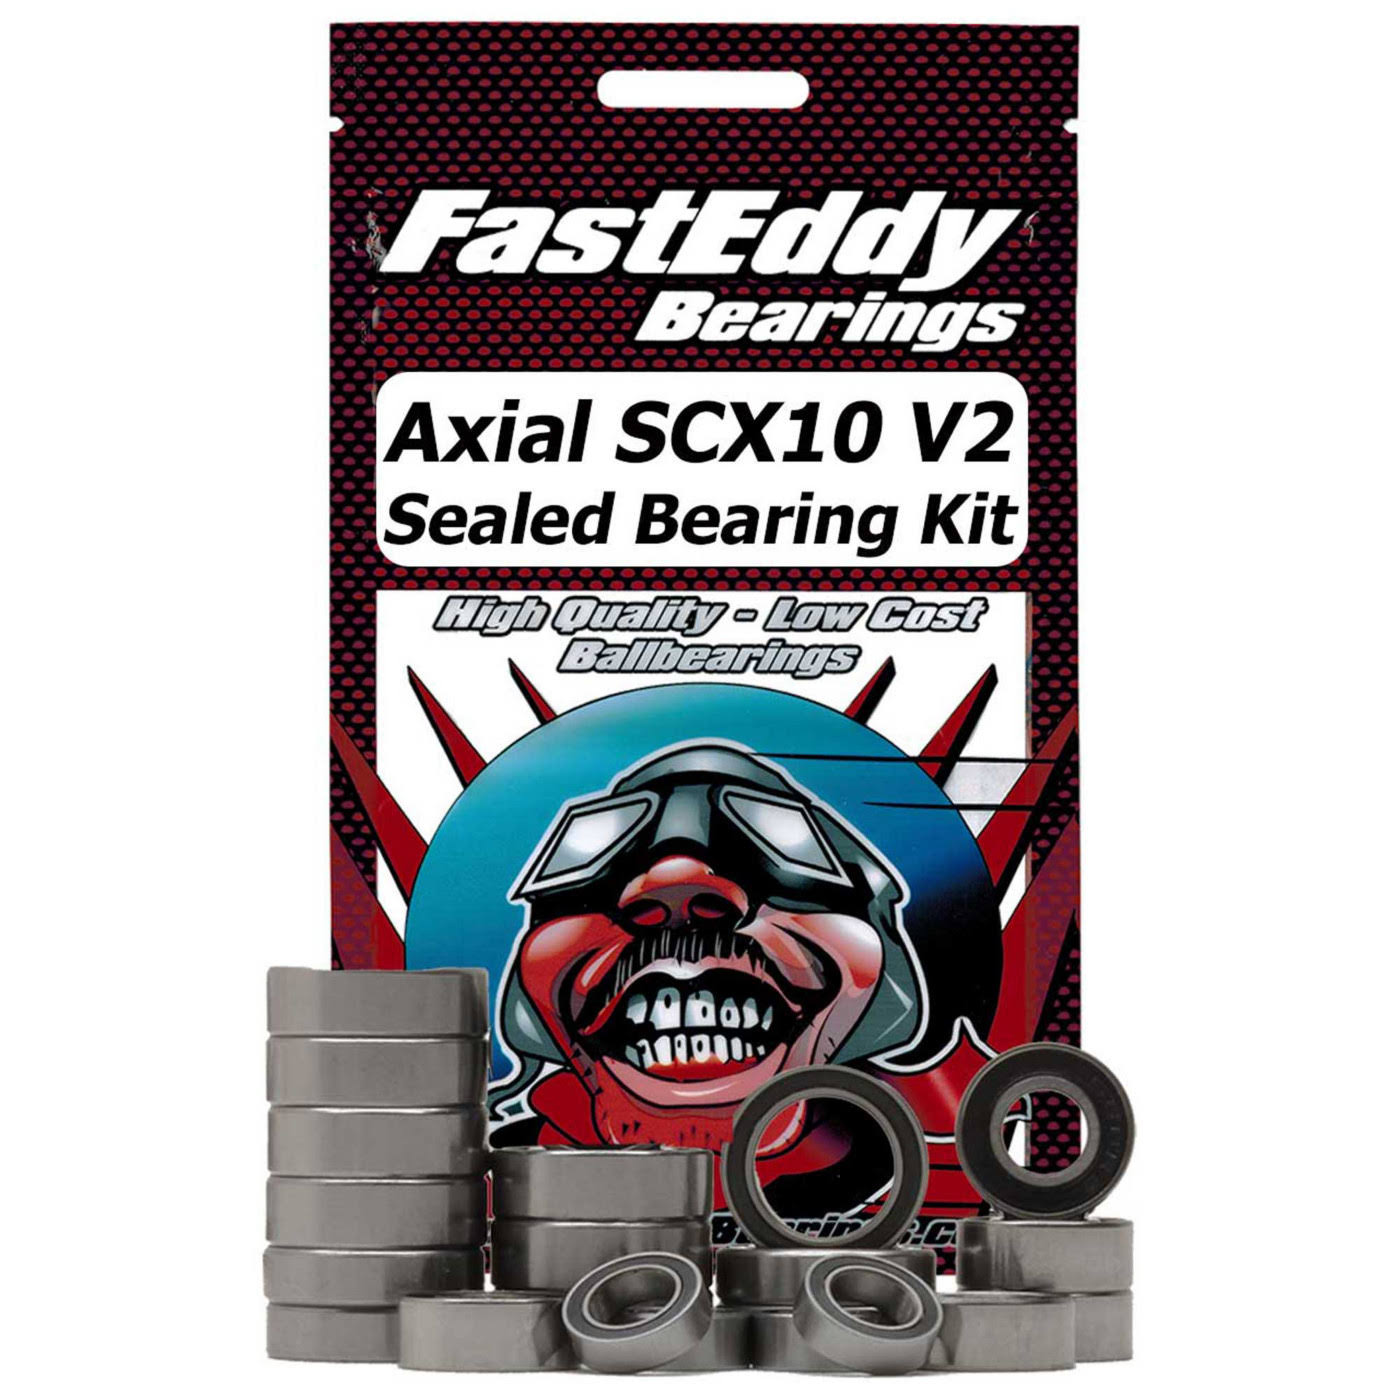 FastEddy Bearings Sealed Bearing Kit: Axial Scx10 II (V2), TFE4437